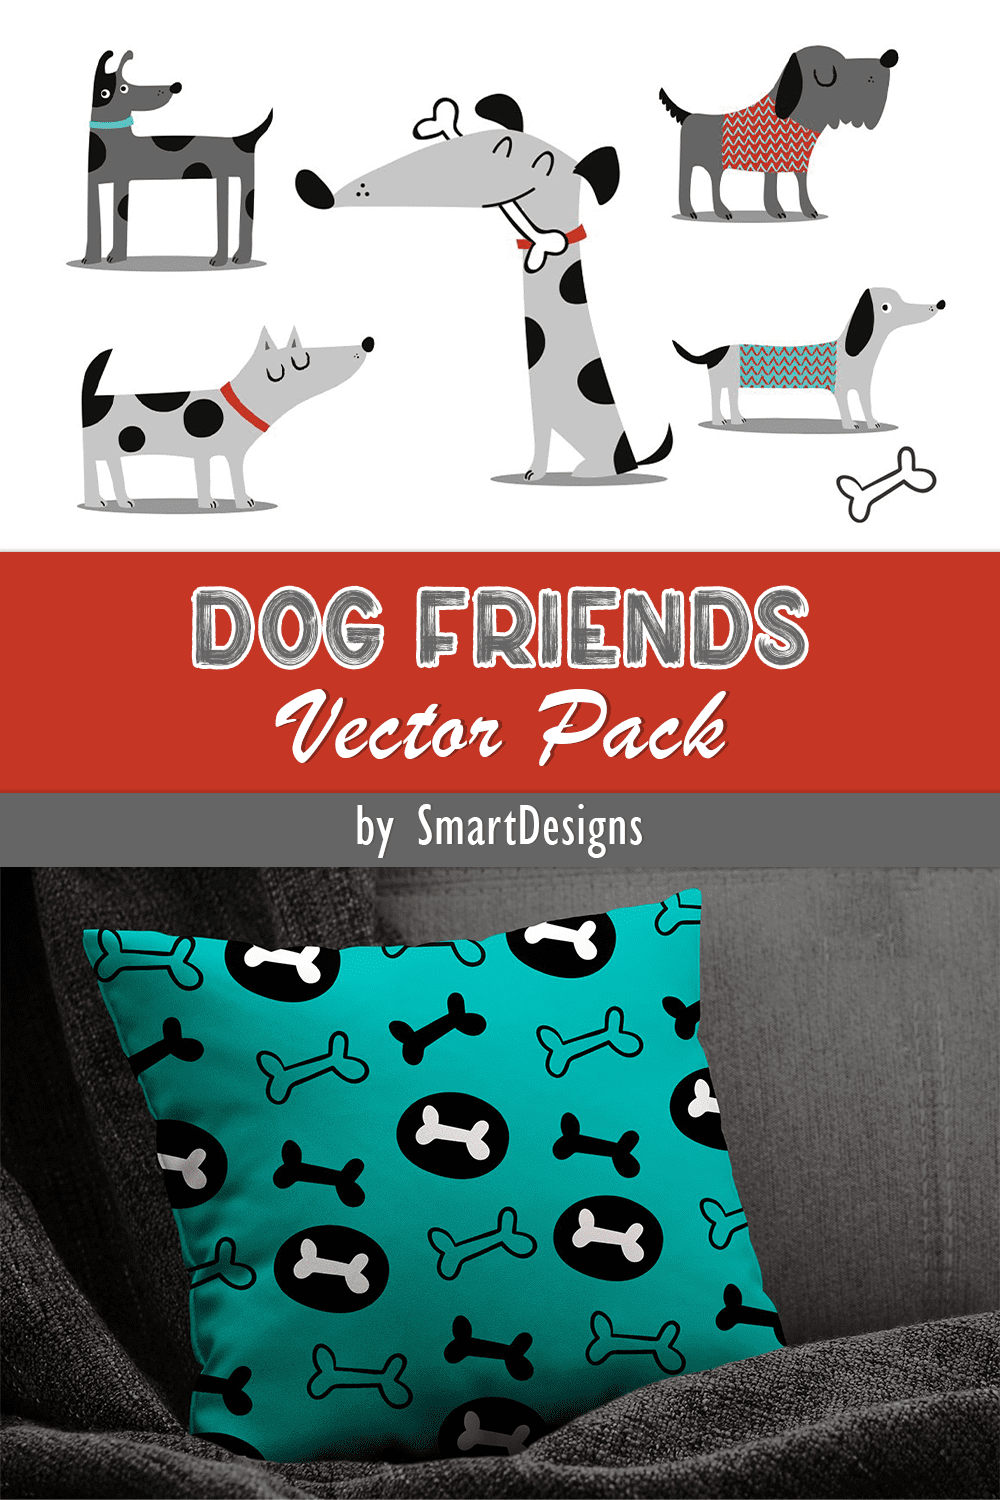 Dog friends vector pack of pinterest.